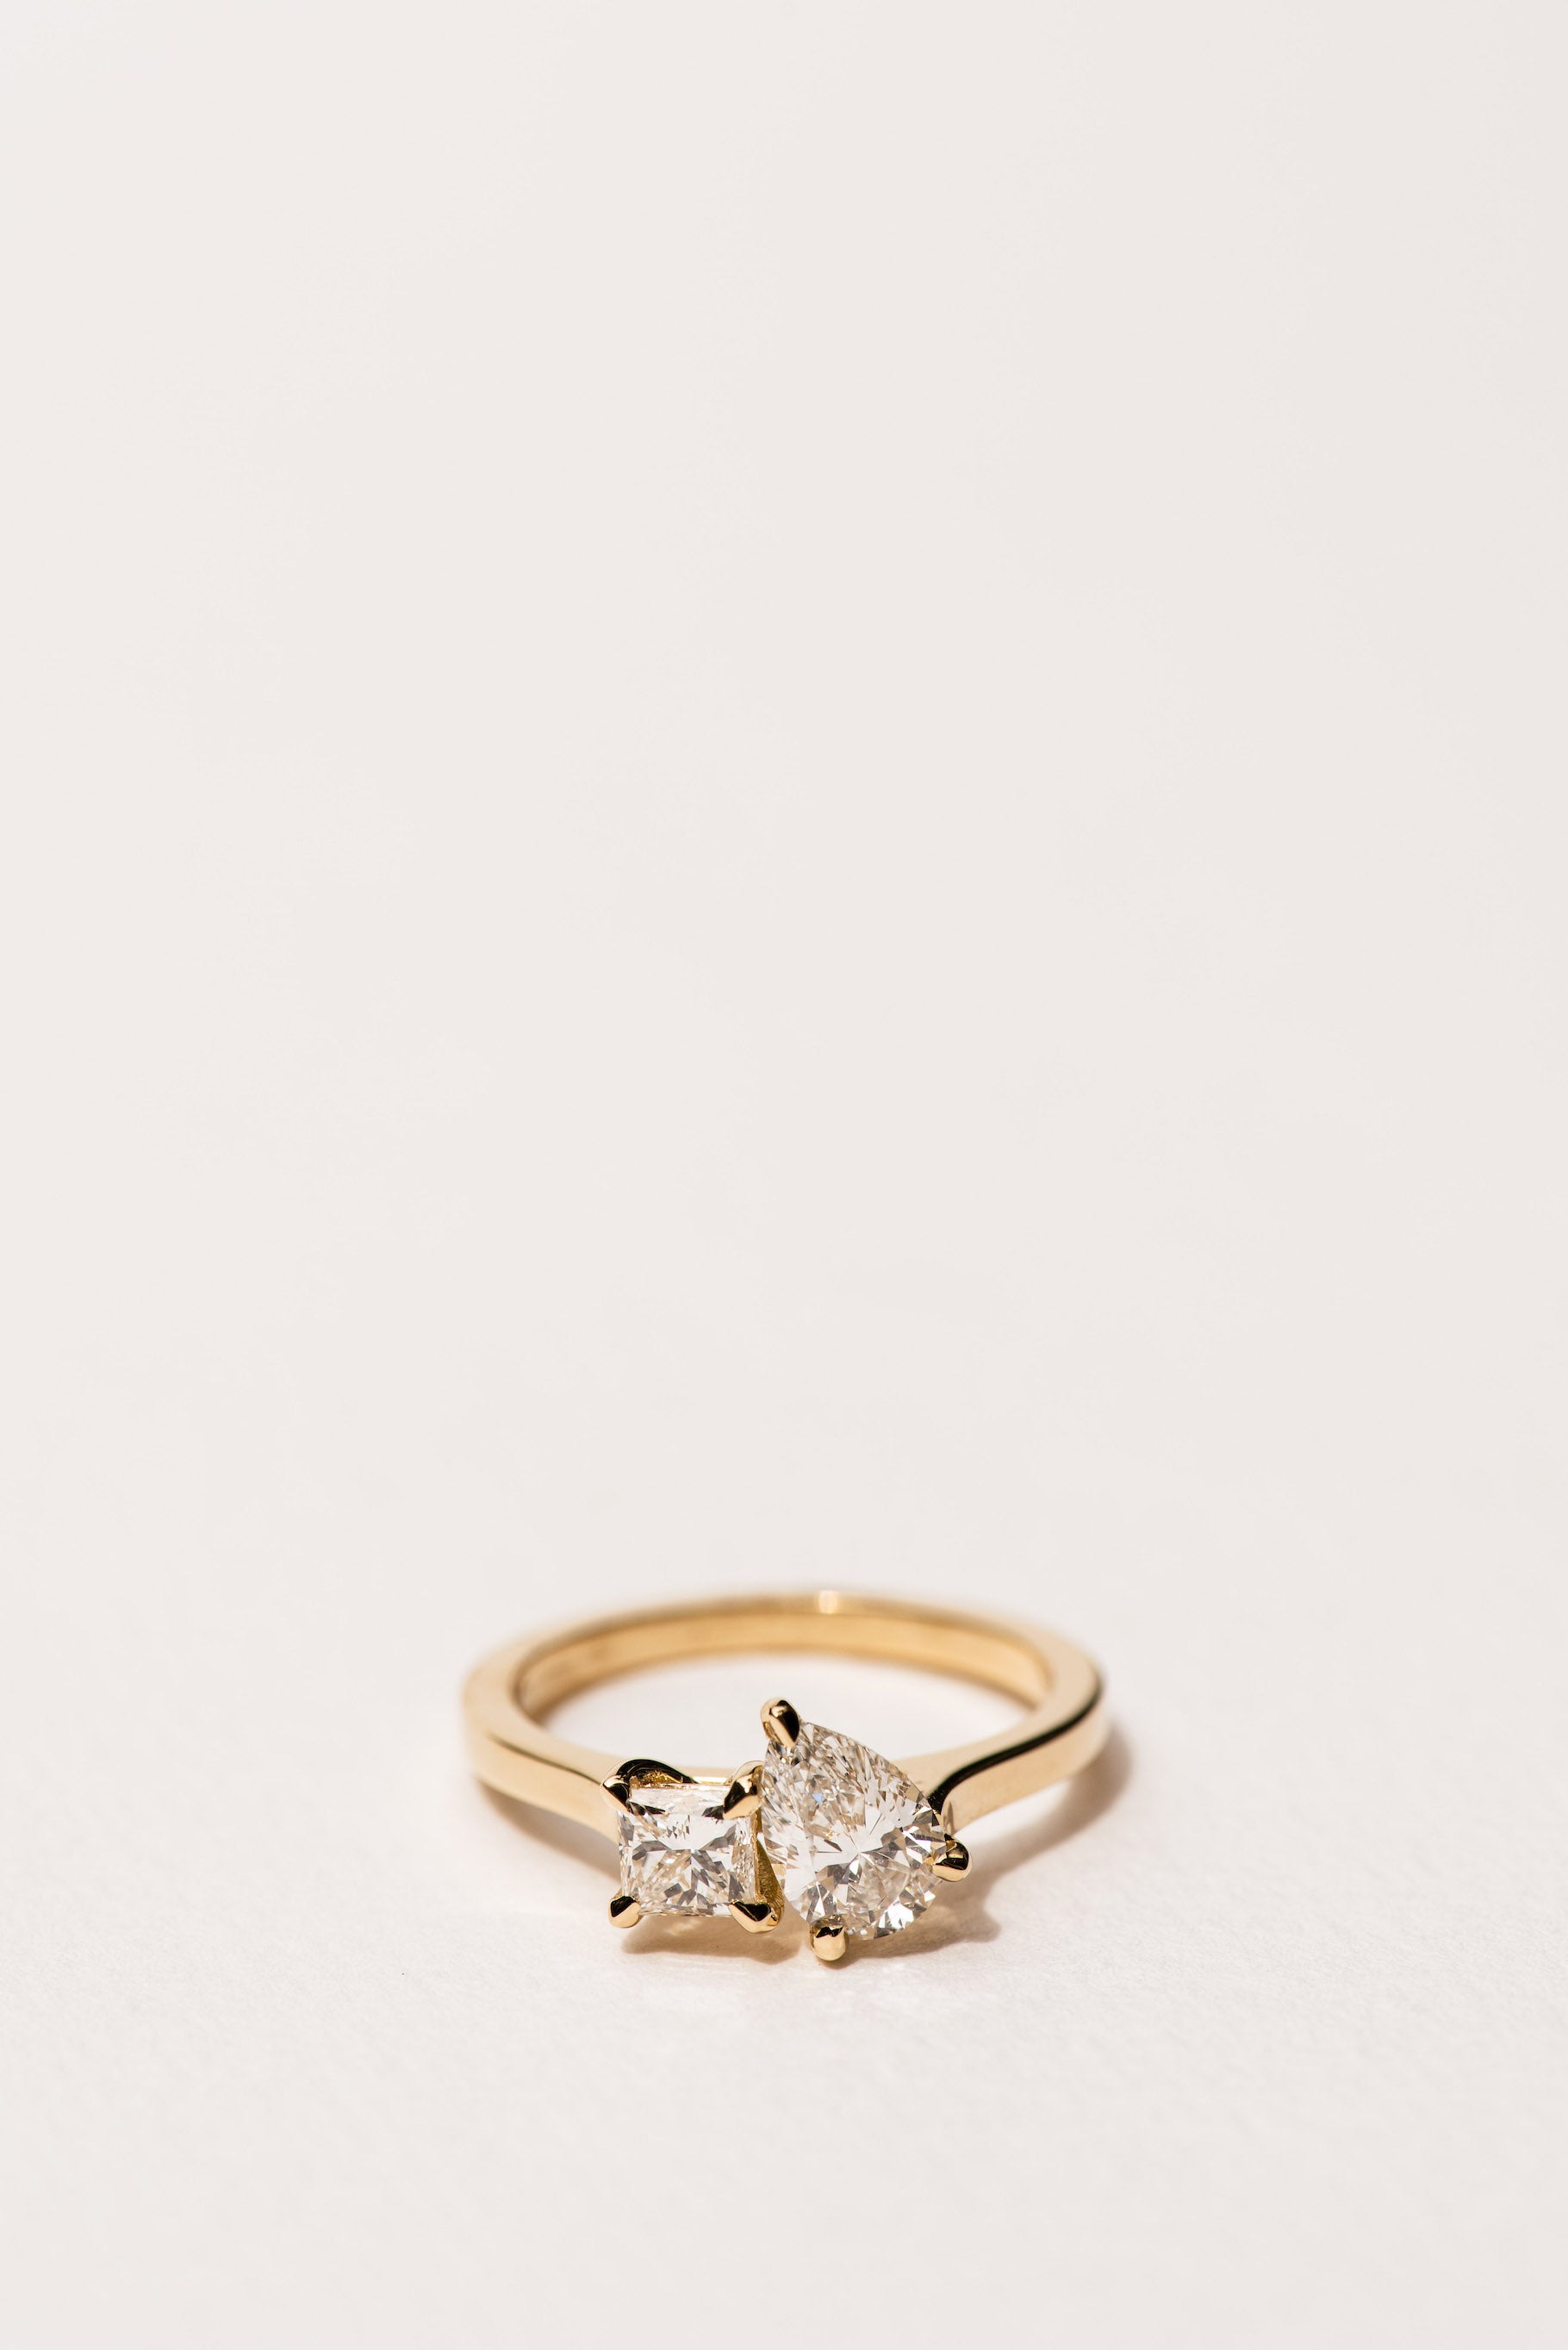 Diamond Engagement Ring - Toi et Moi - Ring - Gold - Pear Diamond - Princess Diamond